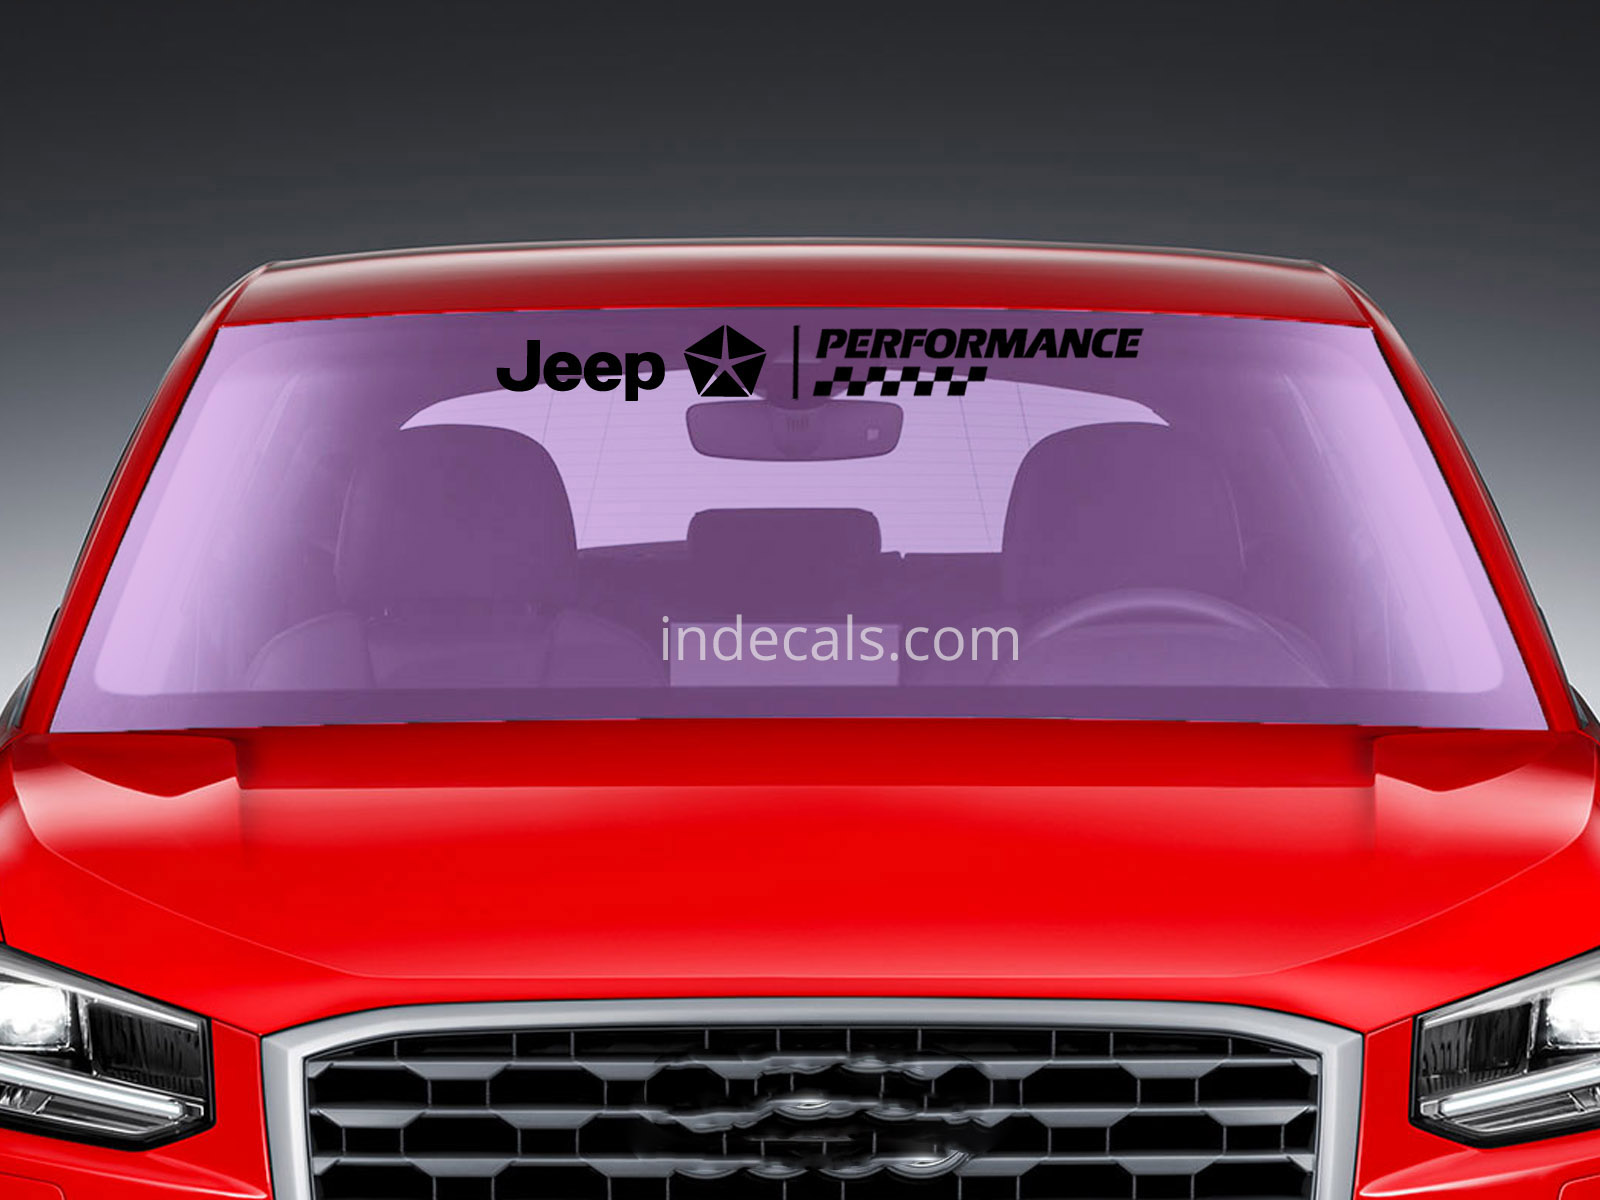 1 x Jeep Performance Sticker for Windshield or Back Window - Black